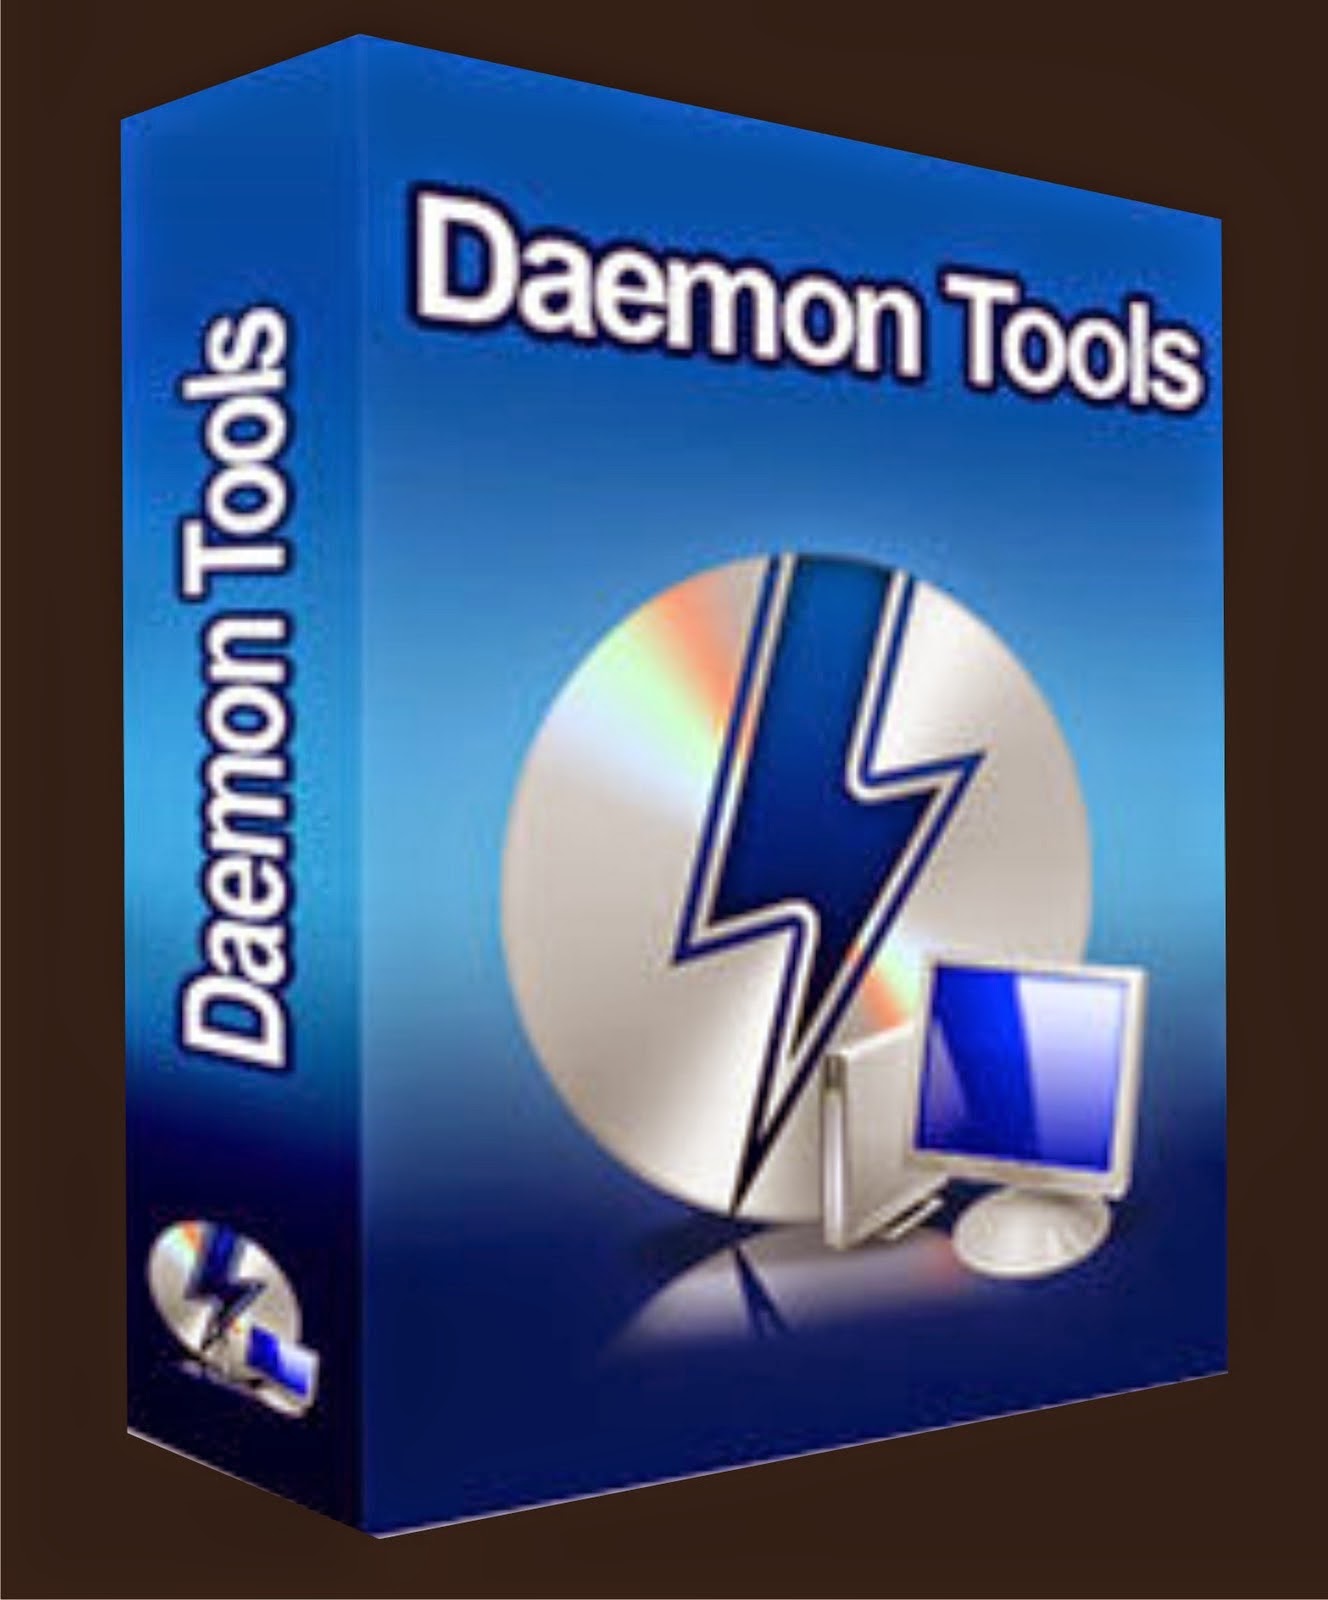 daemon tools free download pc